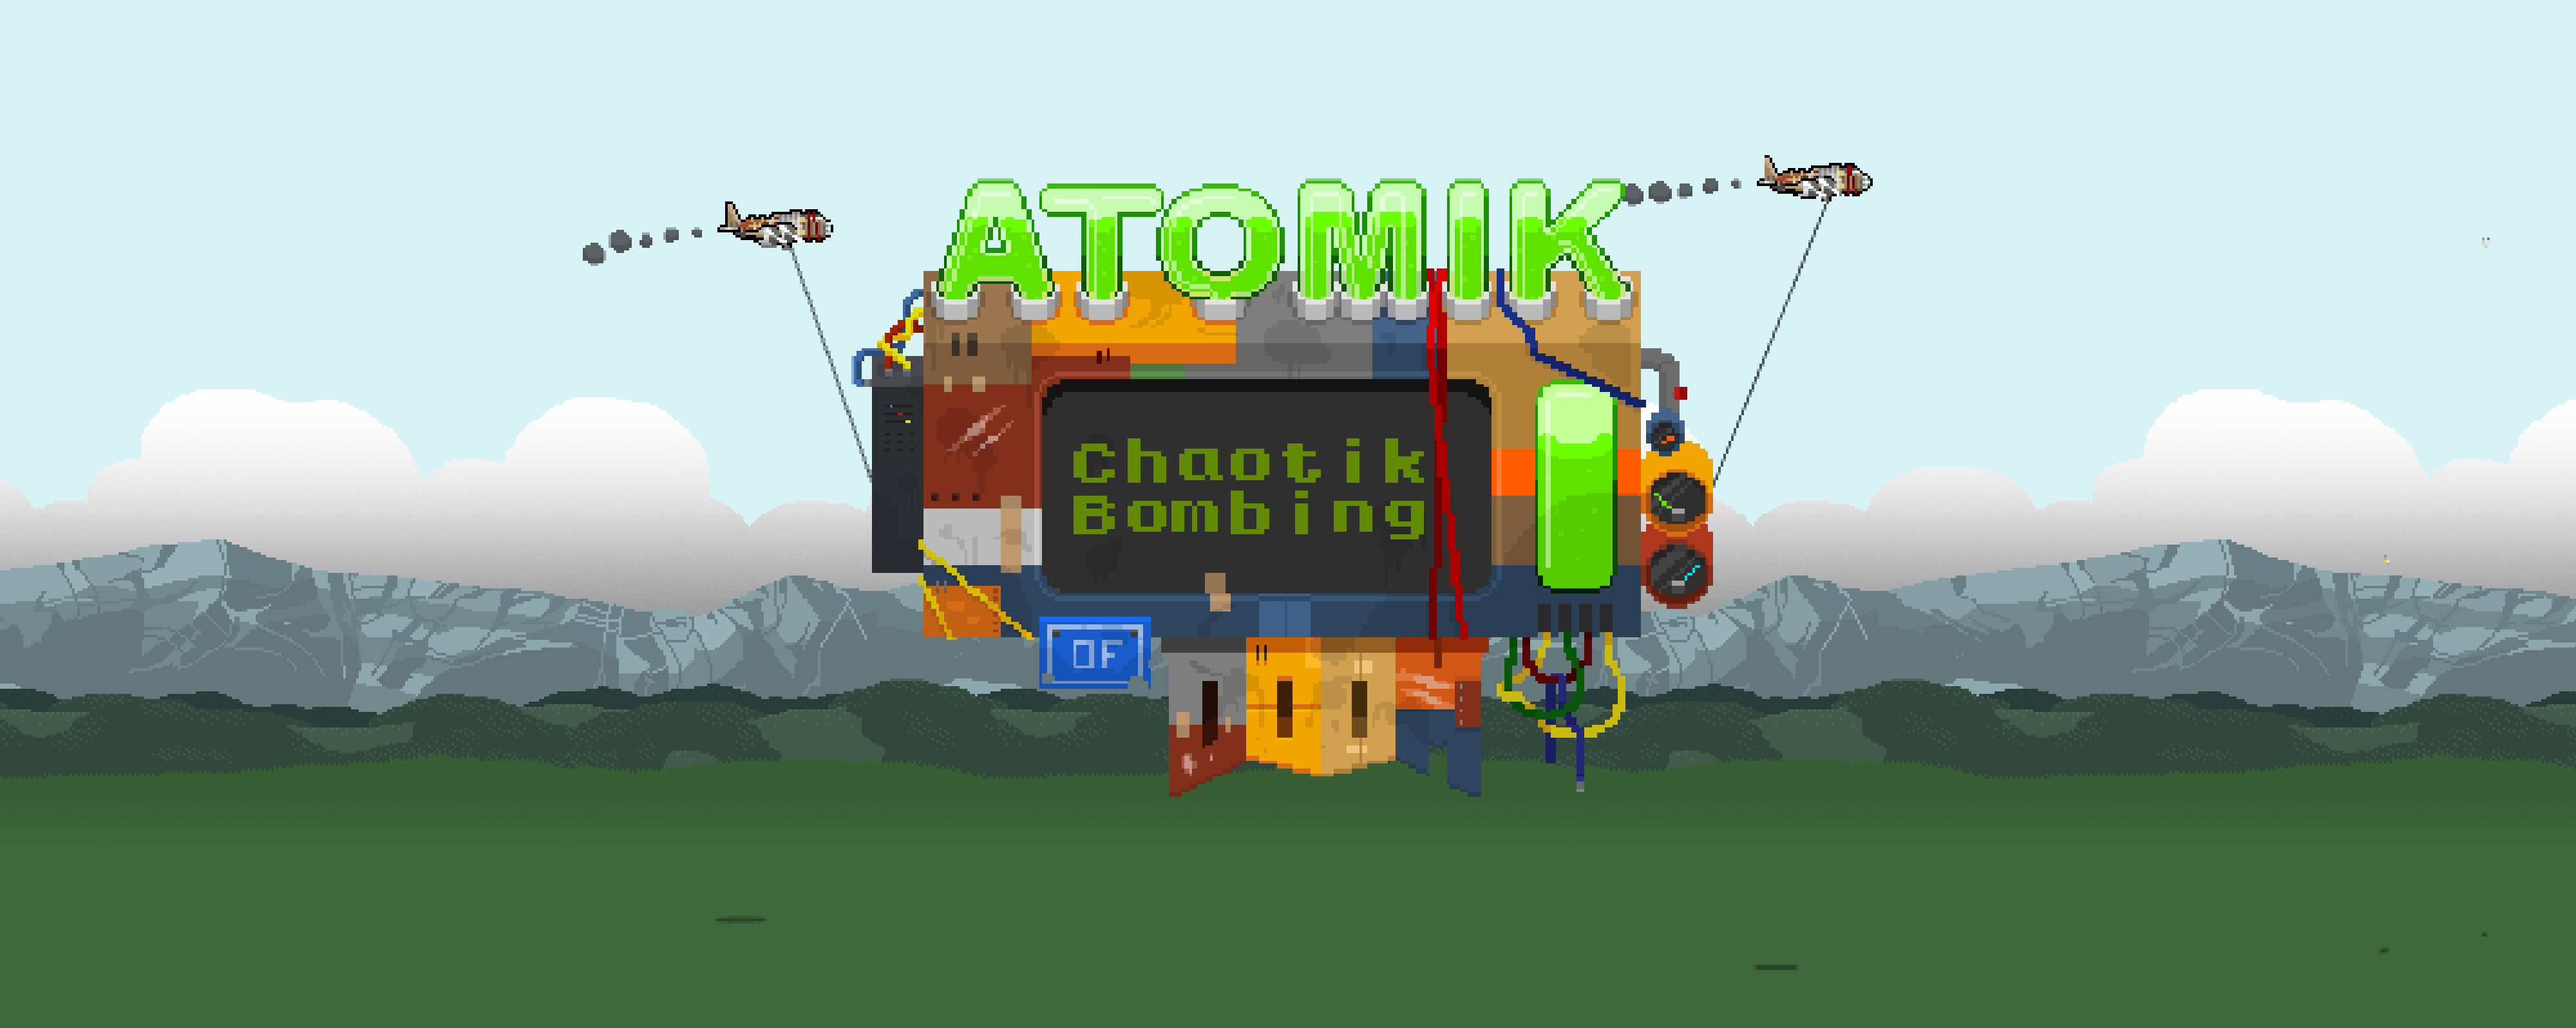 Atomik Chaotik Bombing of Doom